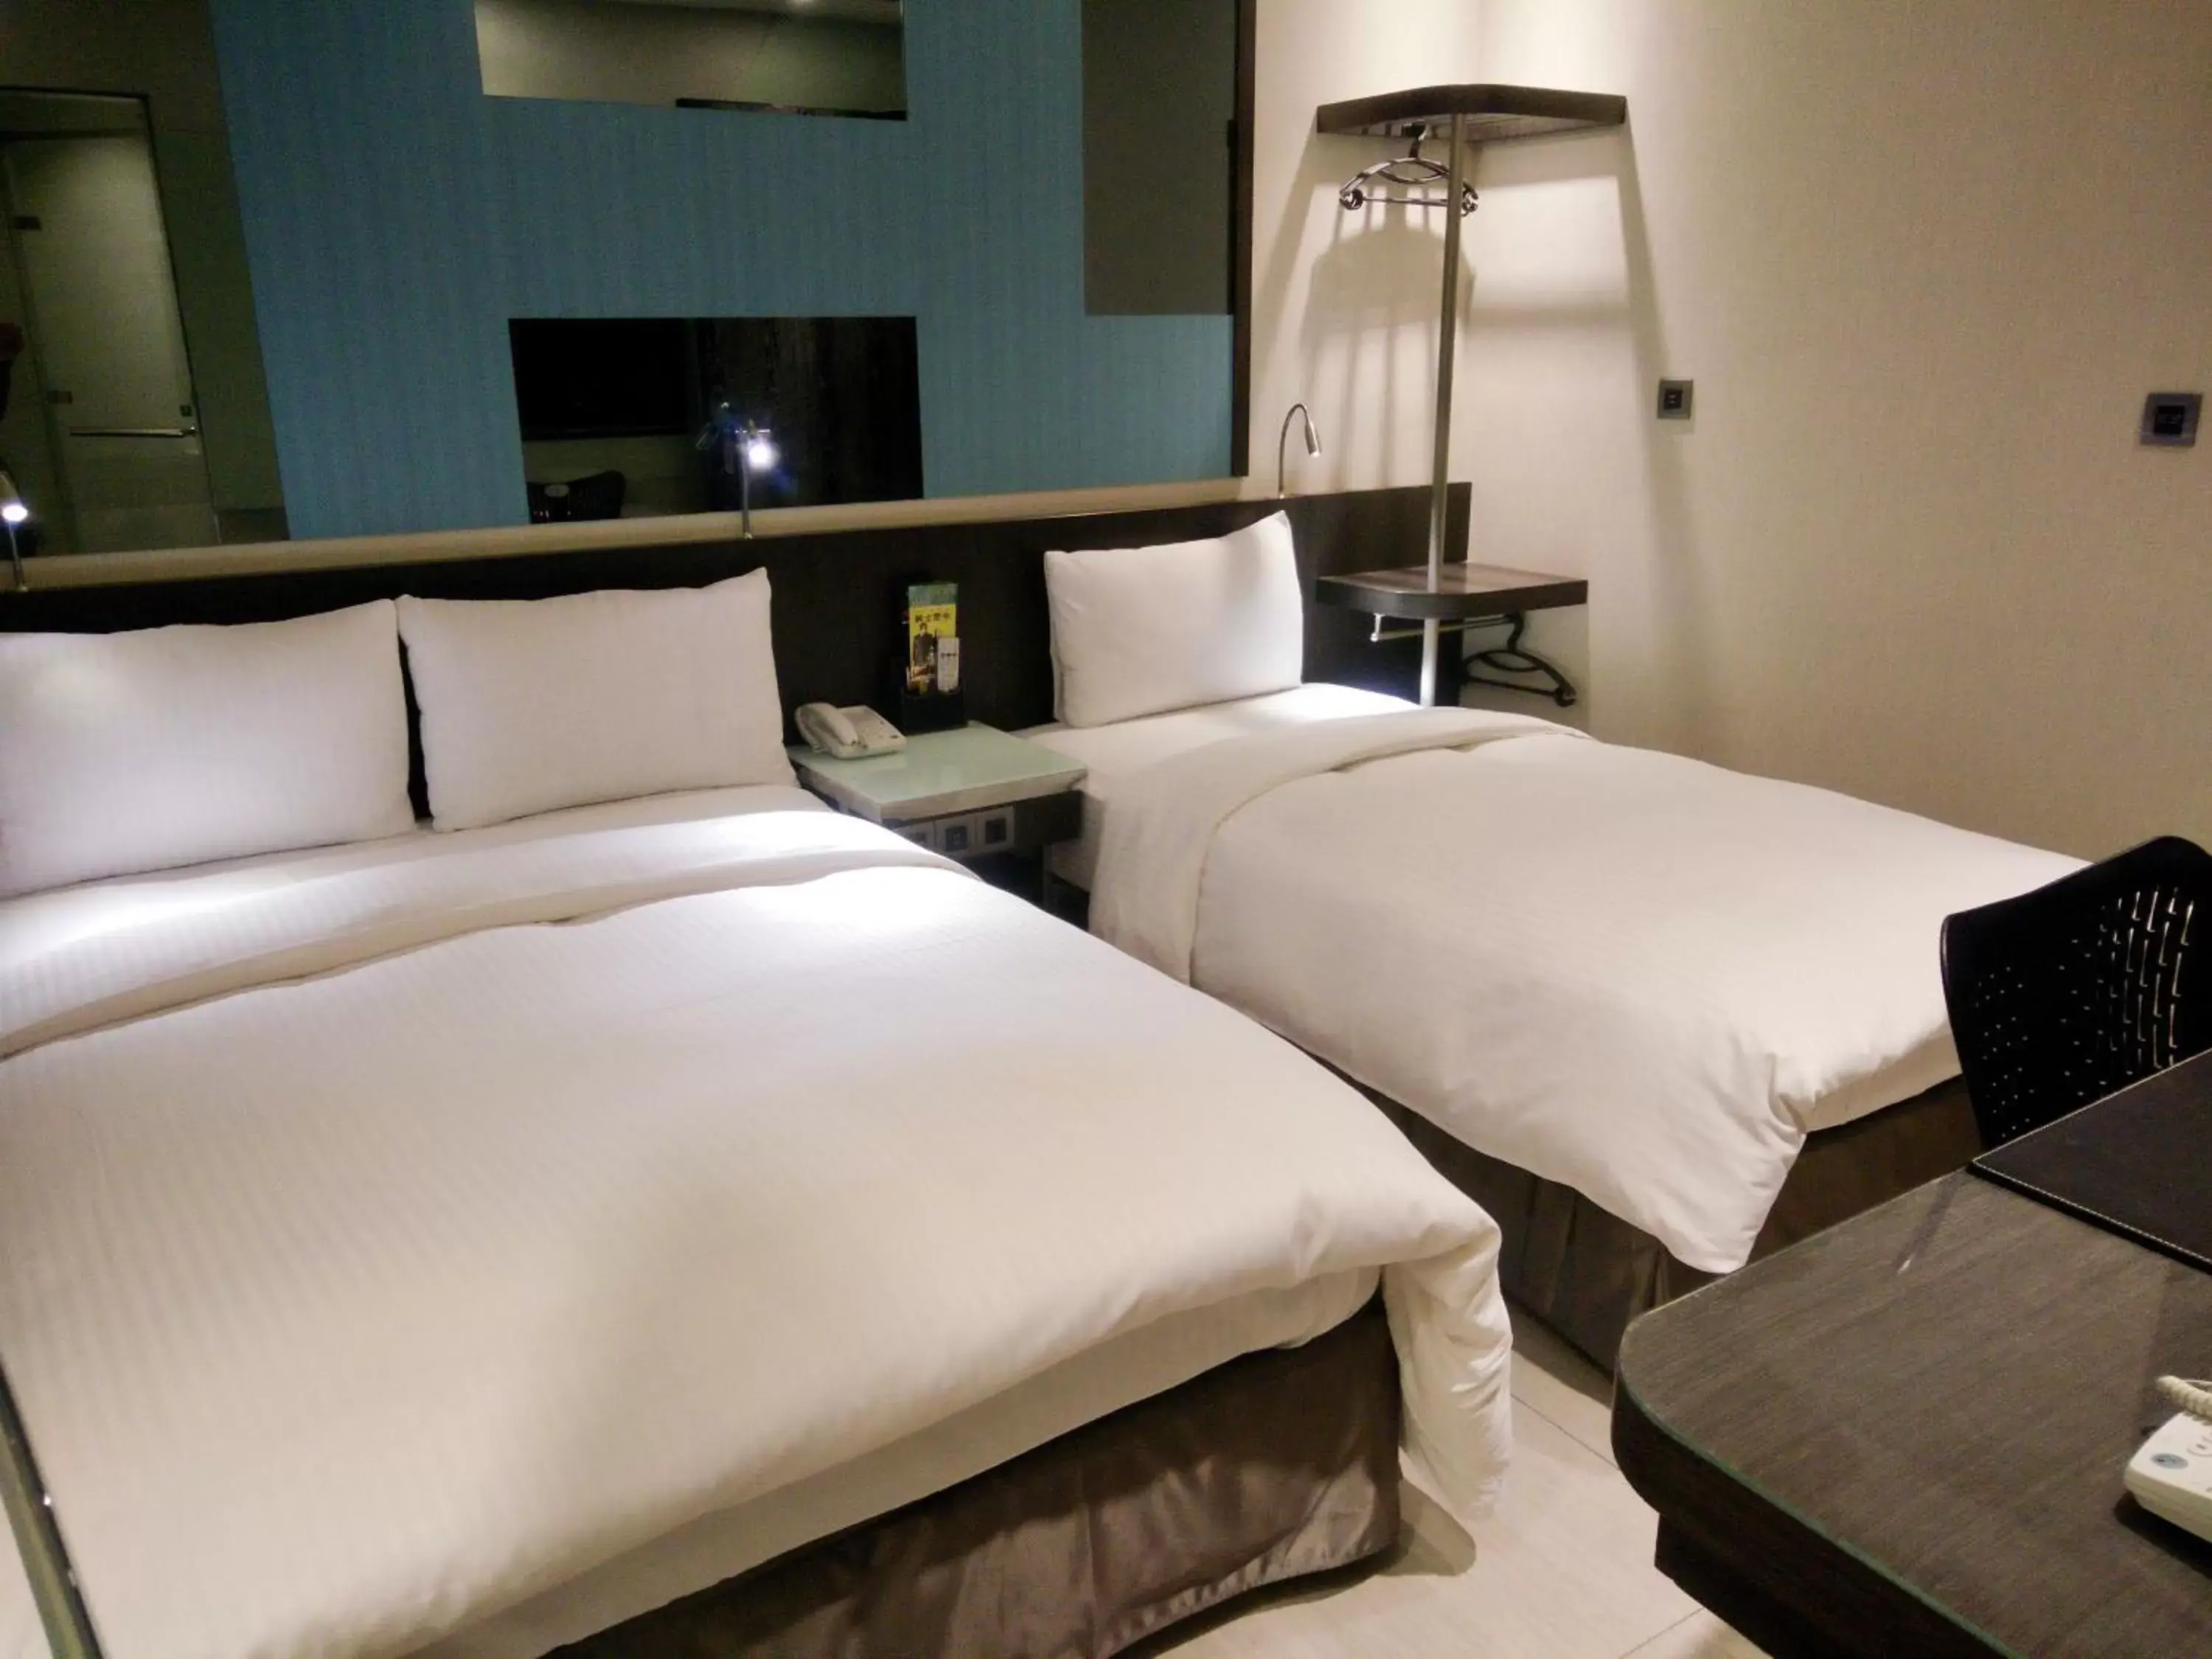 Bed in Beauty Hotels Taipei - Hotel B7